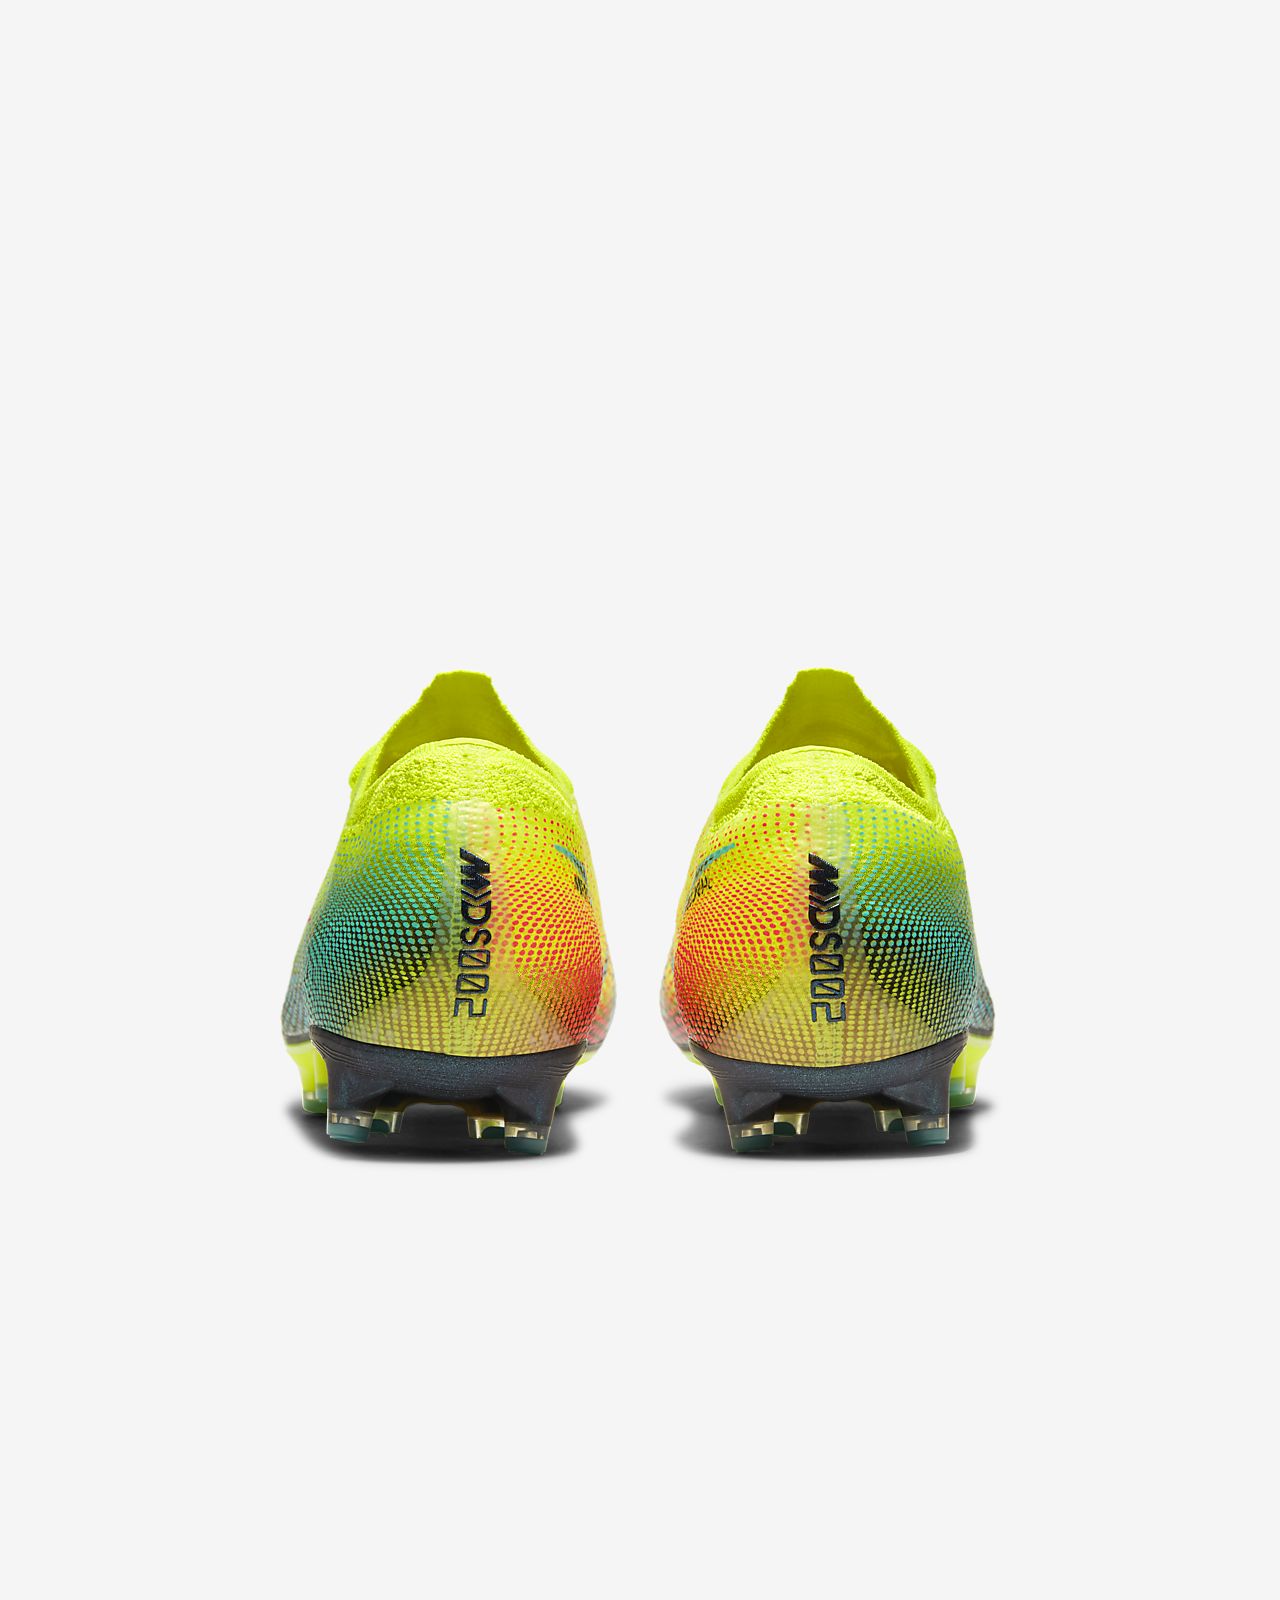 Nike Mercurial Vapor 13 Pro TF Soccer Shoe Black Metallic.